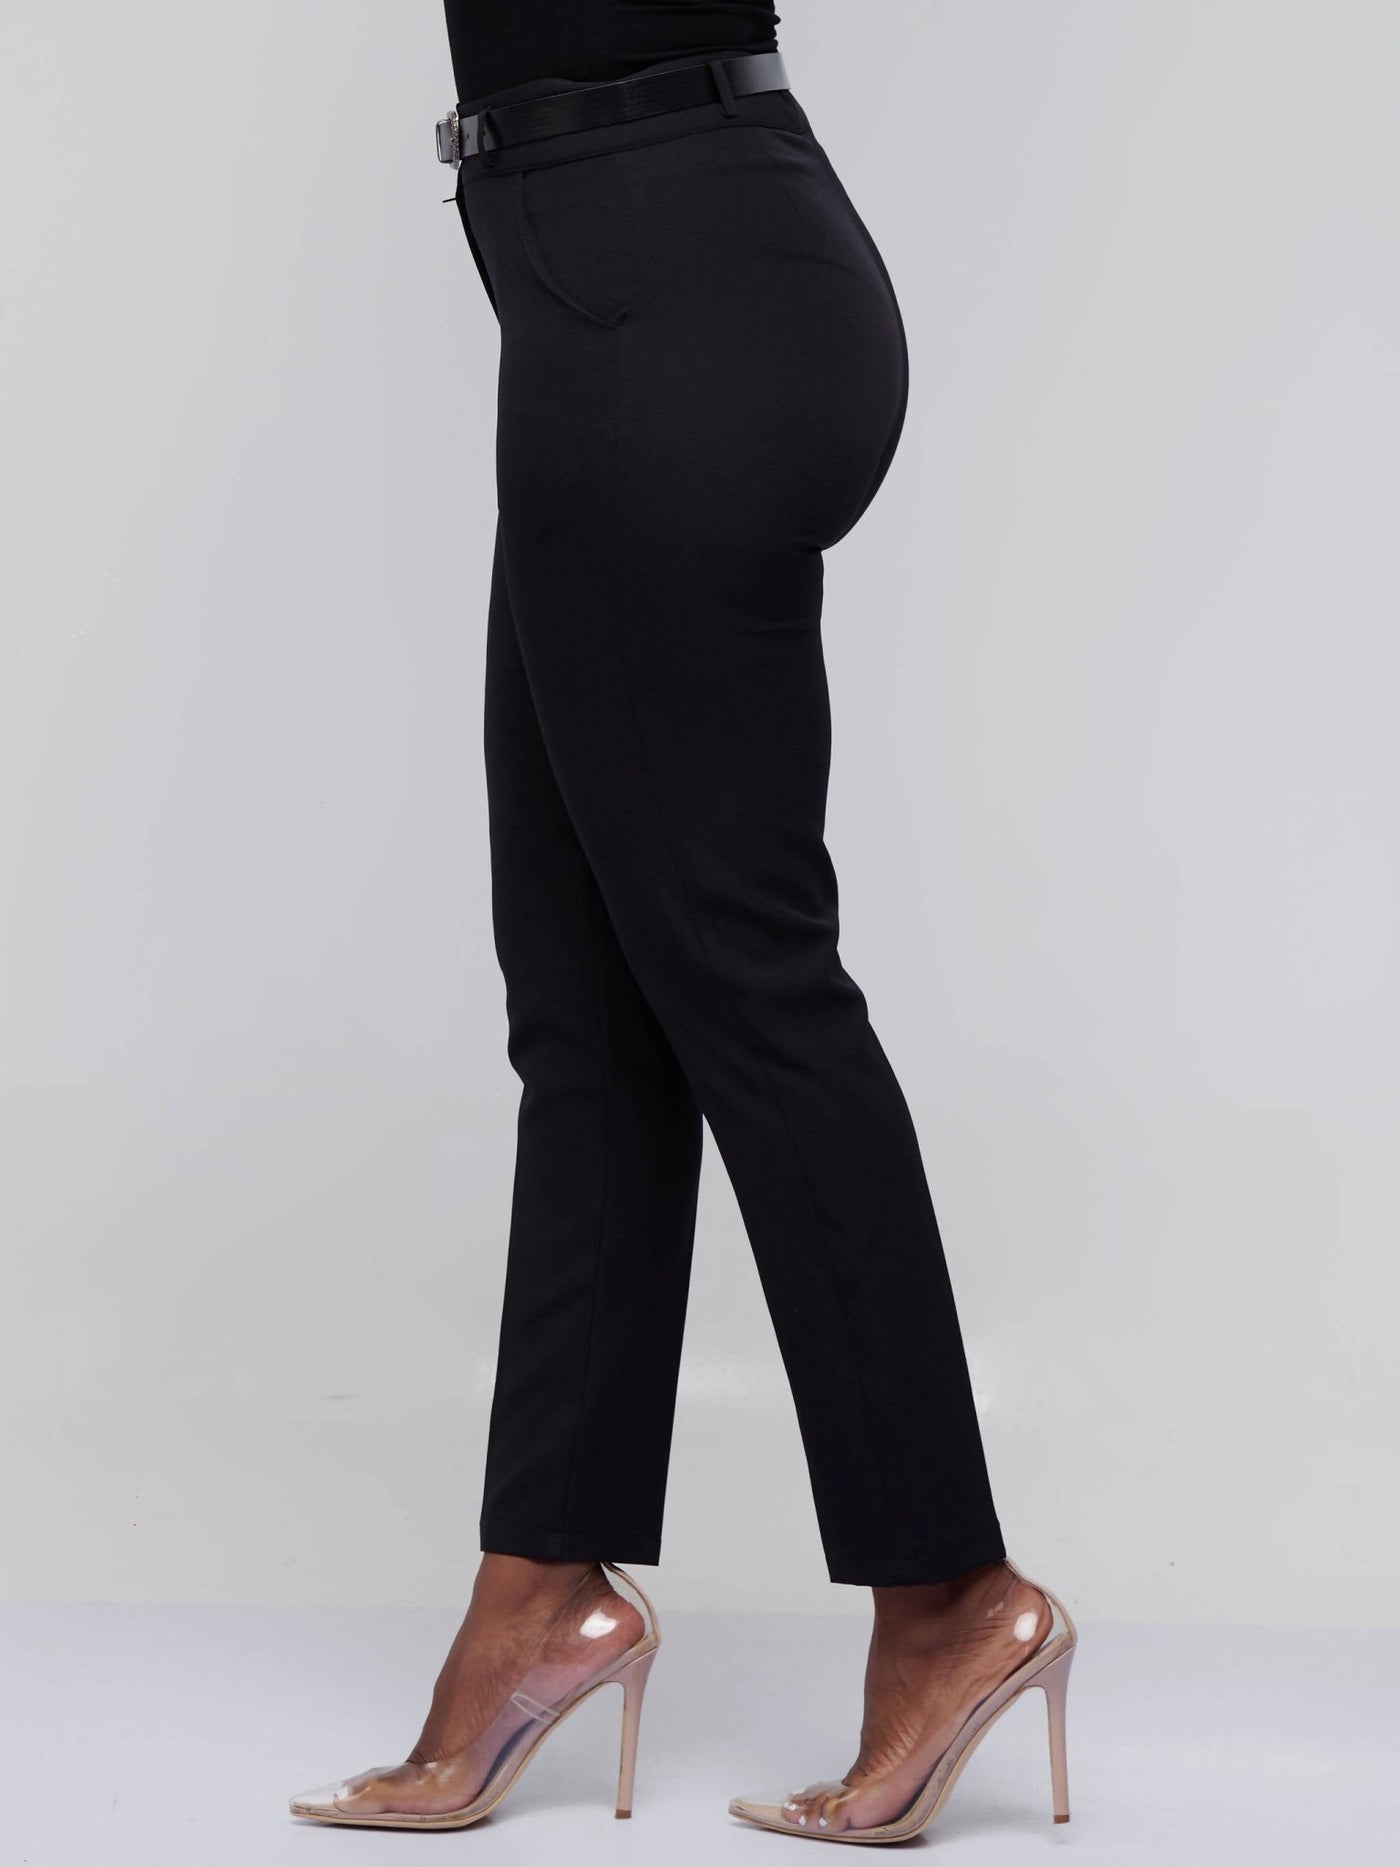 The Fashion Frenzy Trouser - Black - Shop Zetu Kenya